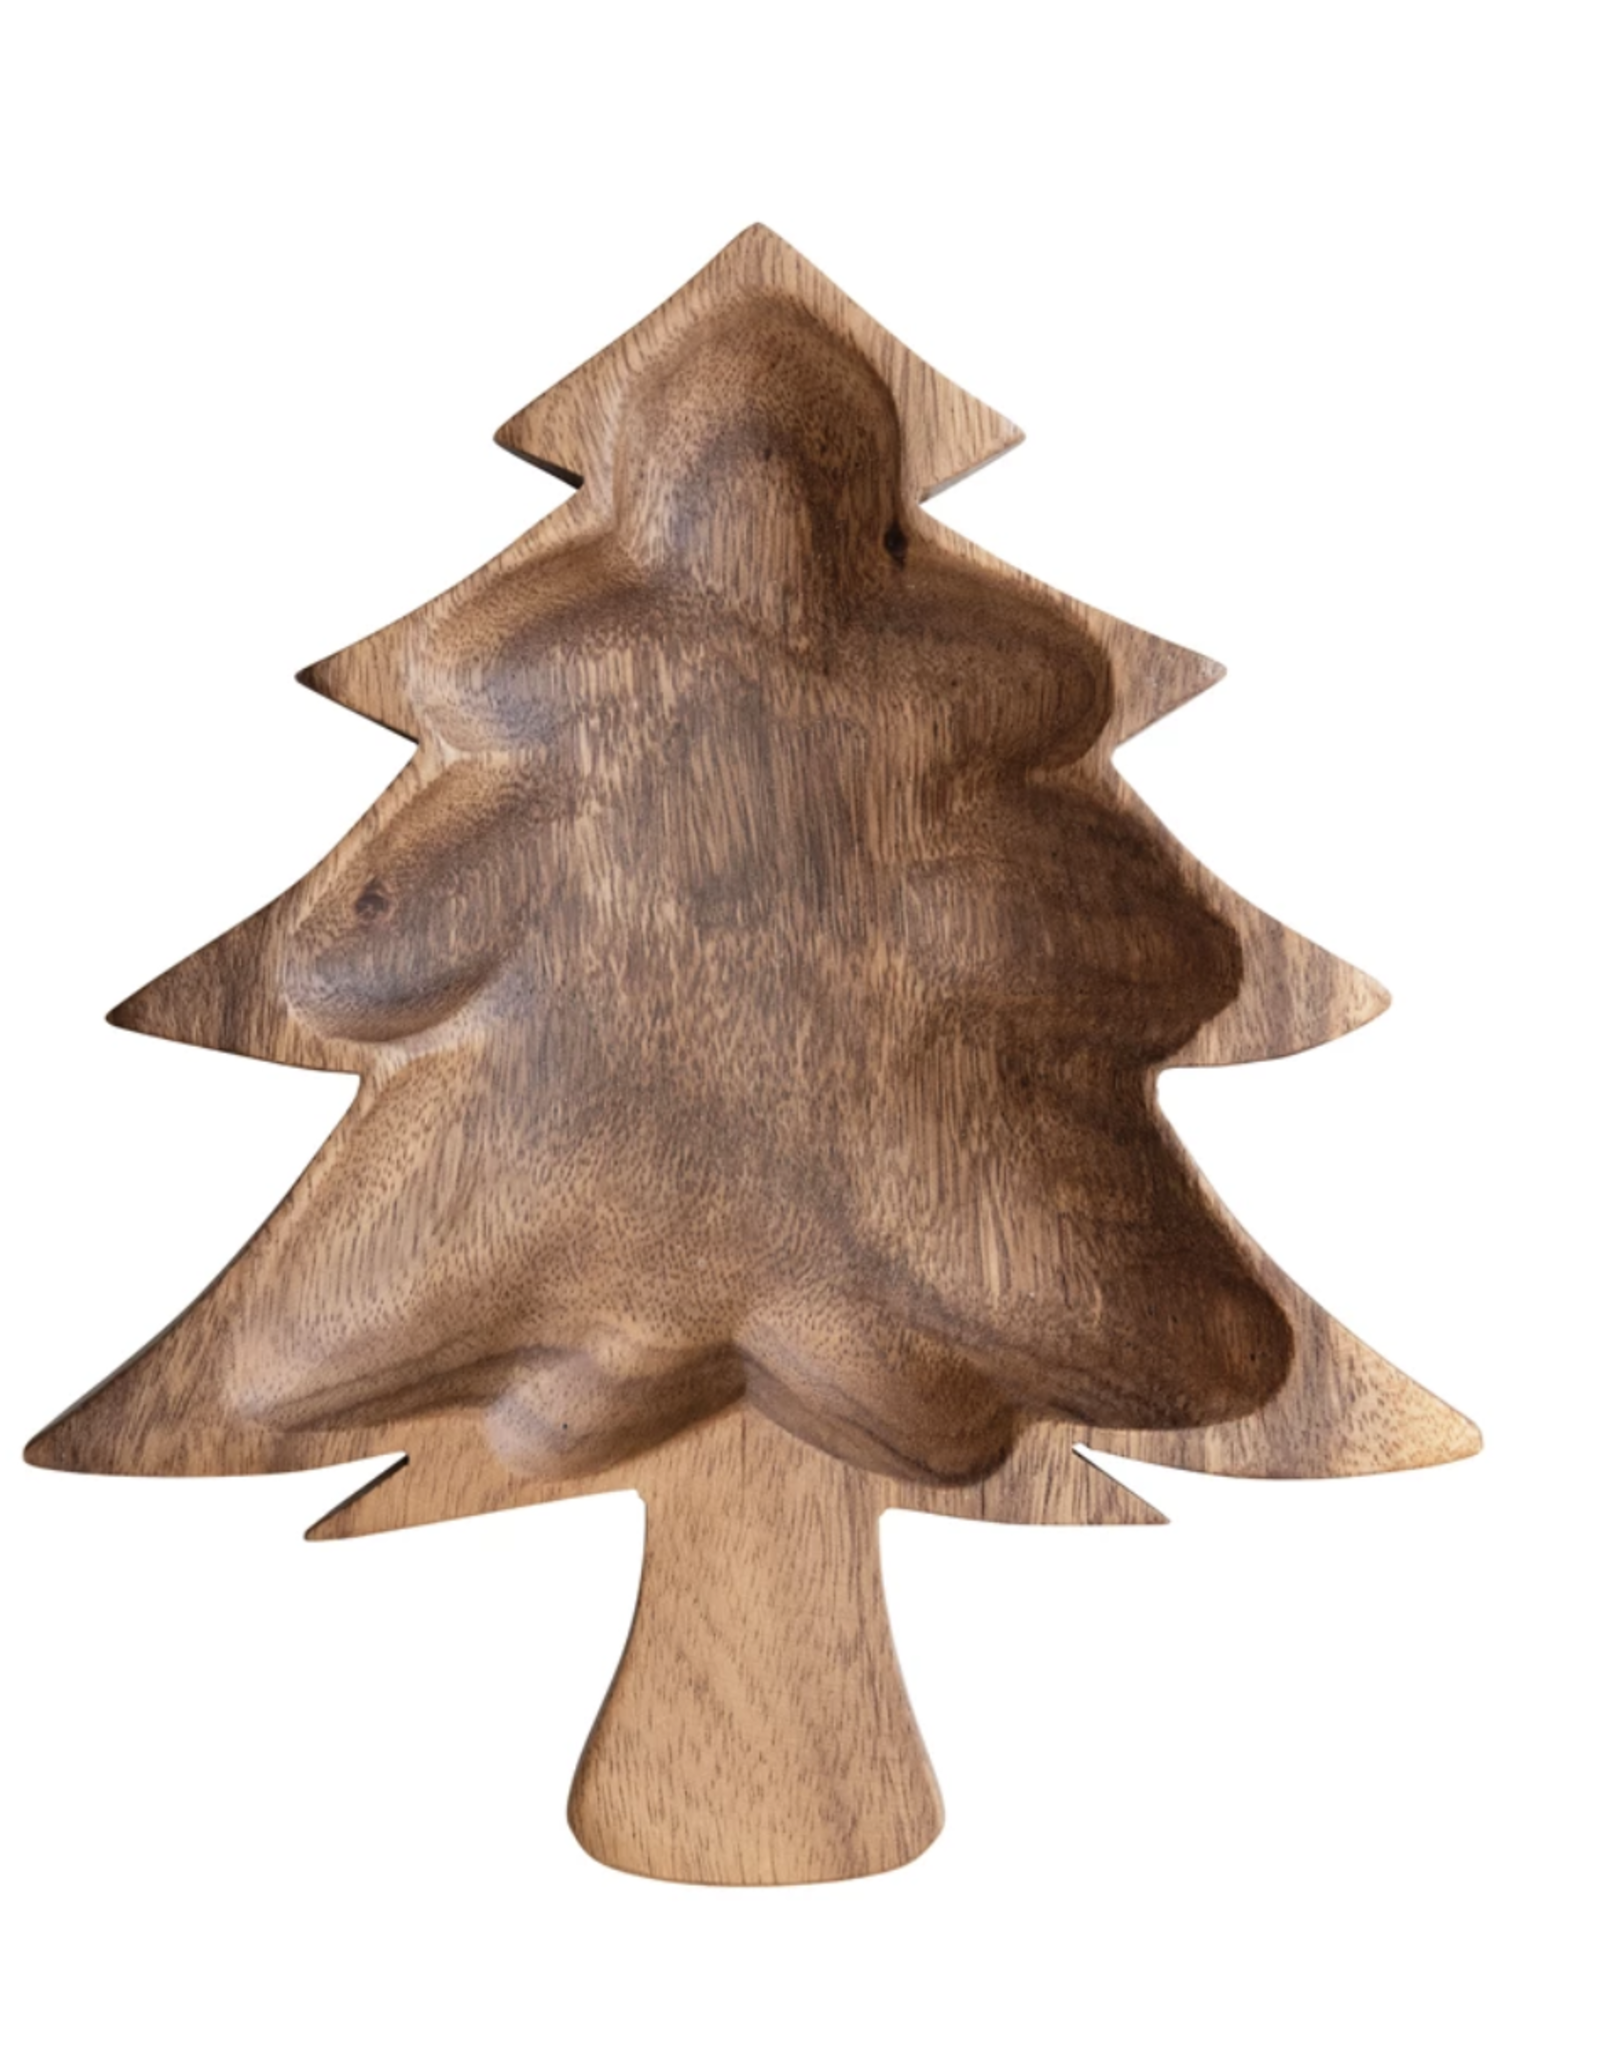 Creative Co-Op Acacia Wood Christmas Tree Shaped Bowl